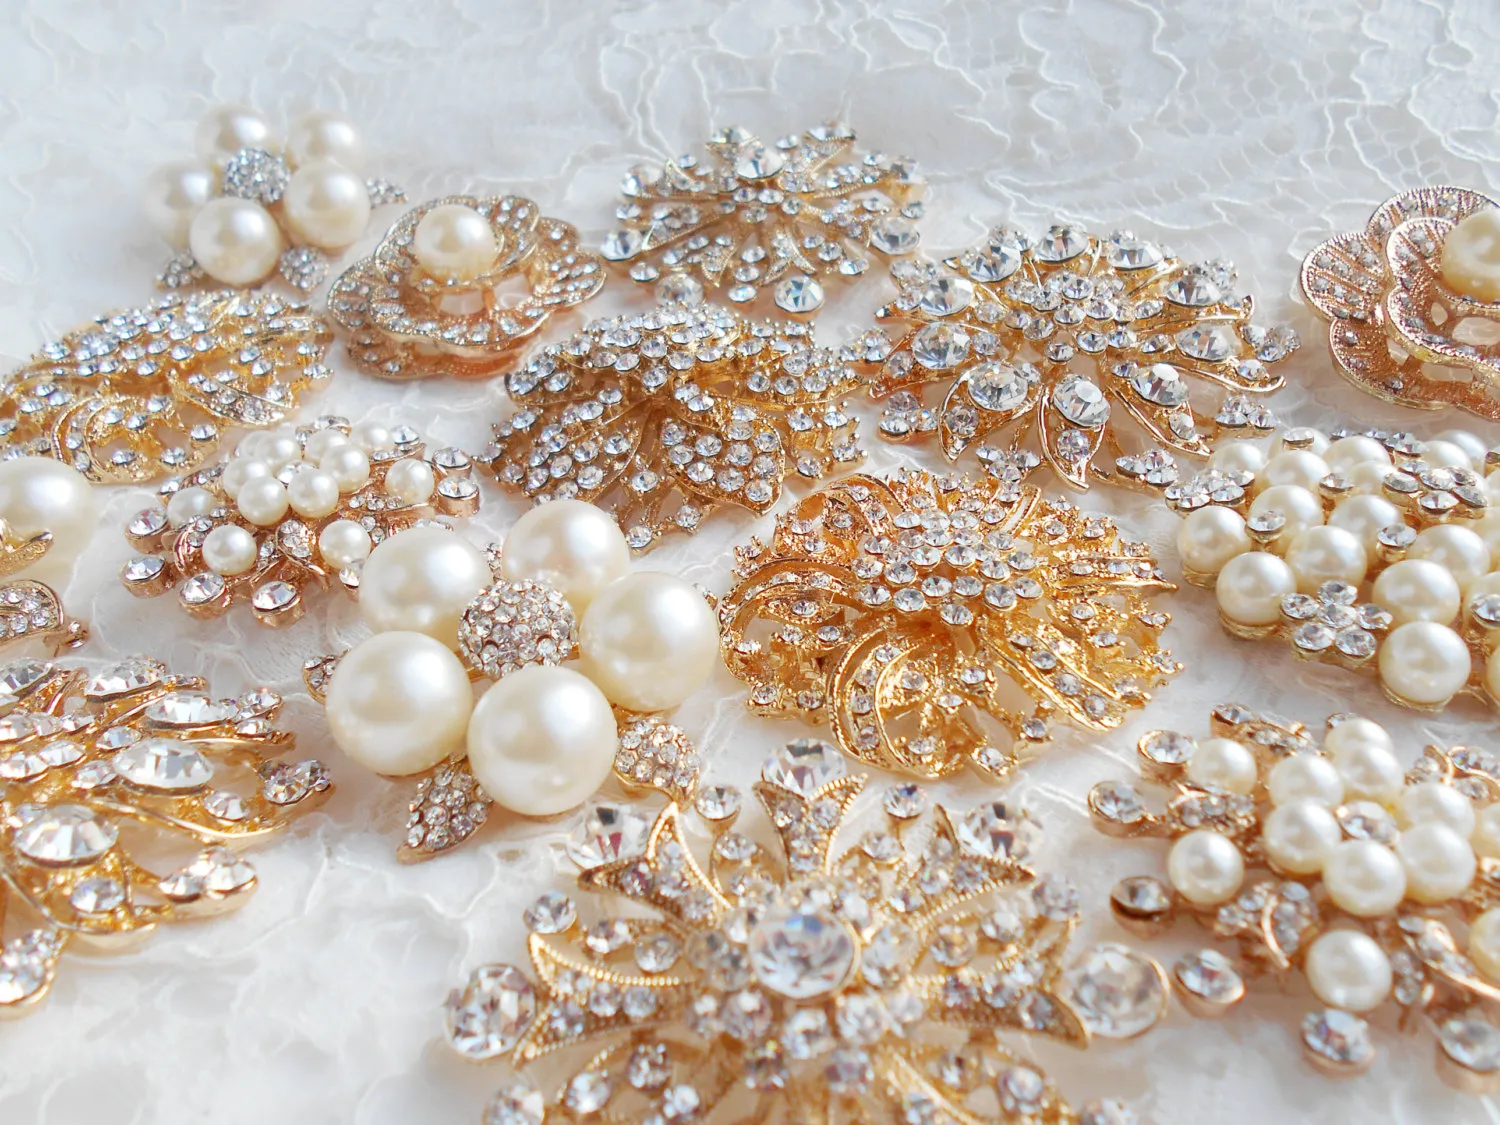 Gold Tone Clear Rhinestone Crystal and Cream Pearl Party or Wedding Bouquet Brooches Bridal Accessory Diy Broach Wedding Supplies